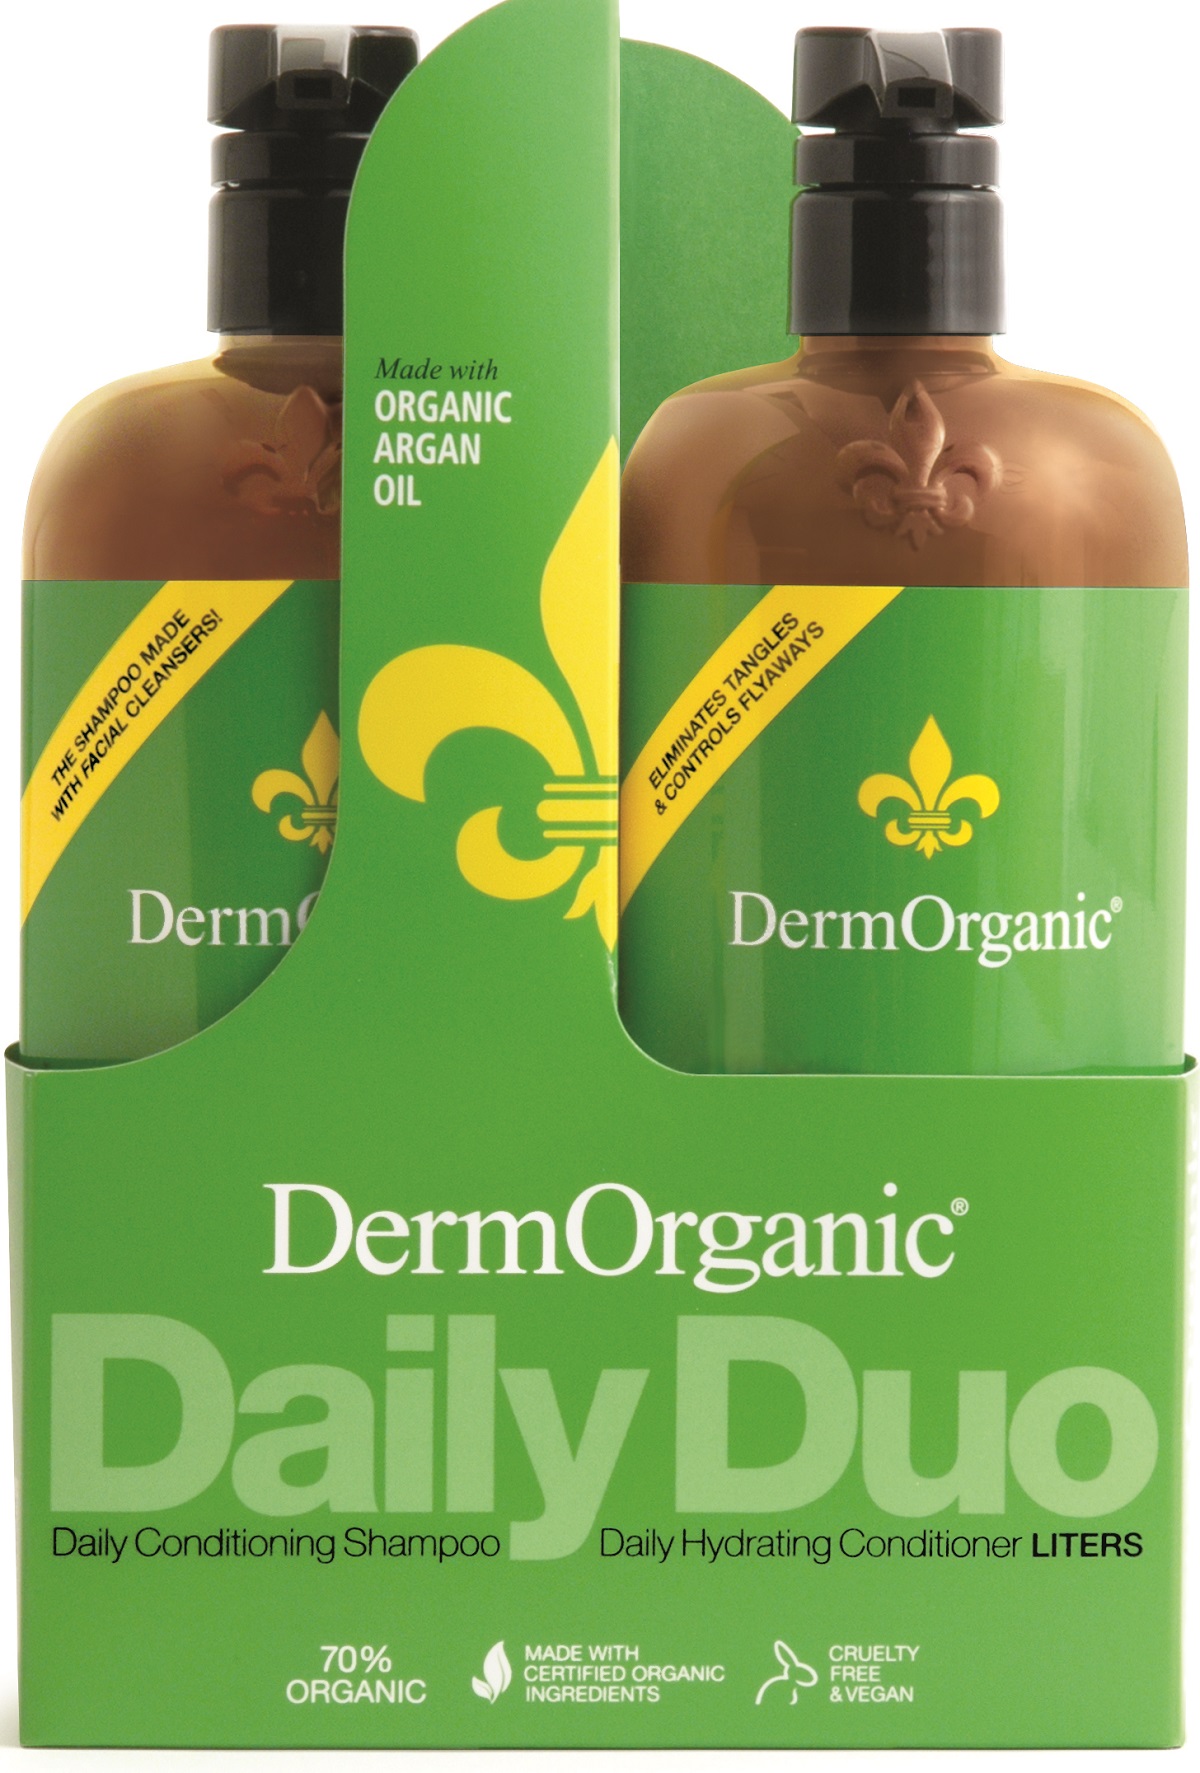 DermOrganic Daily Duo